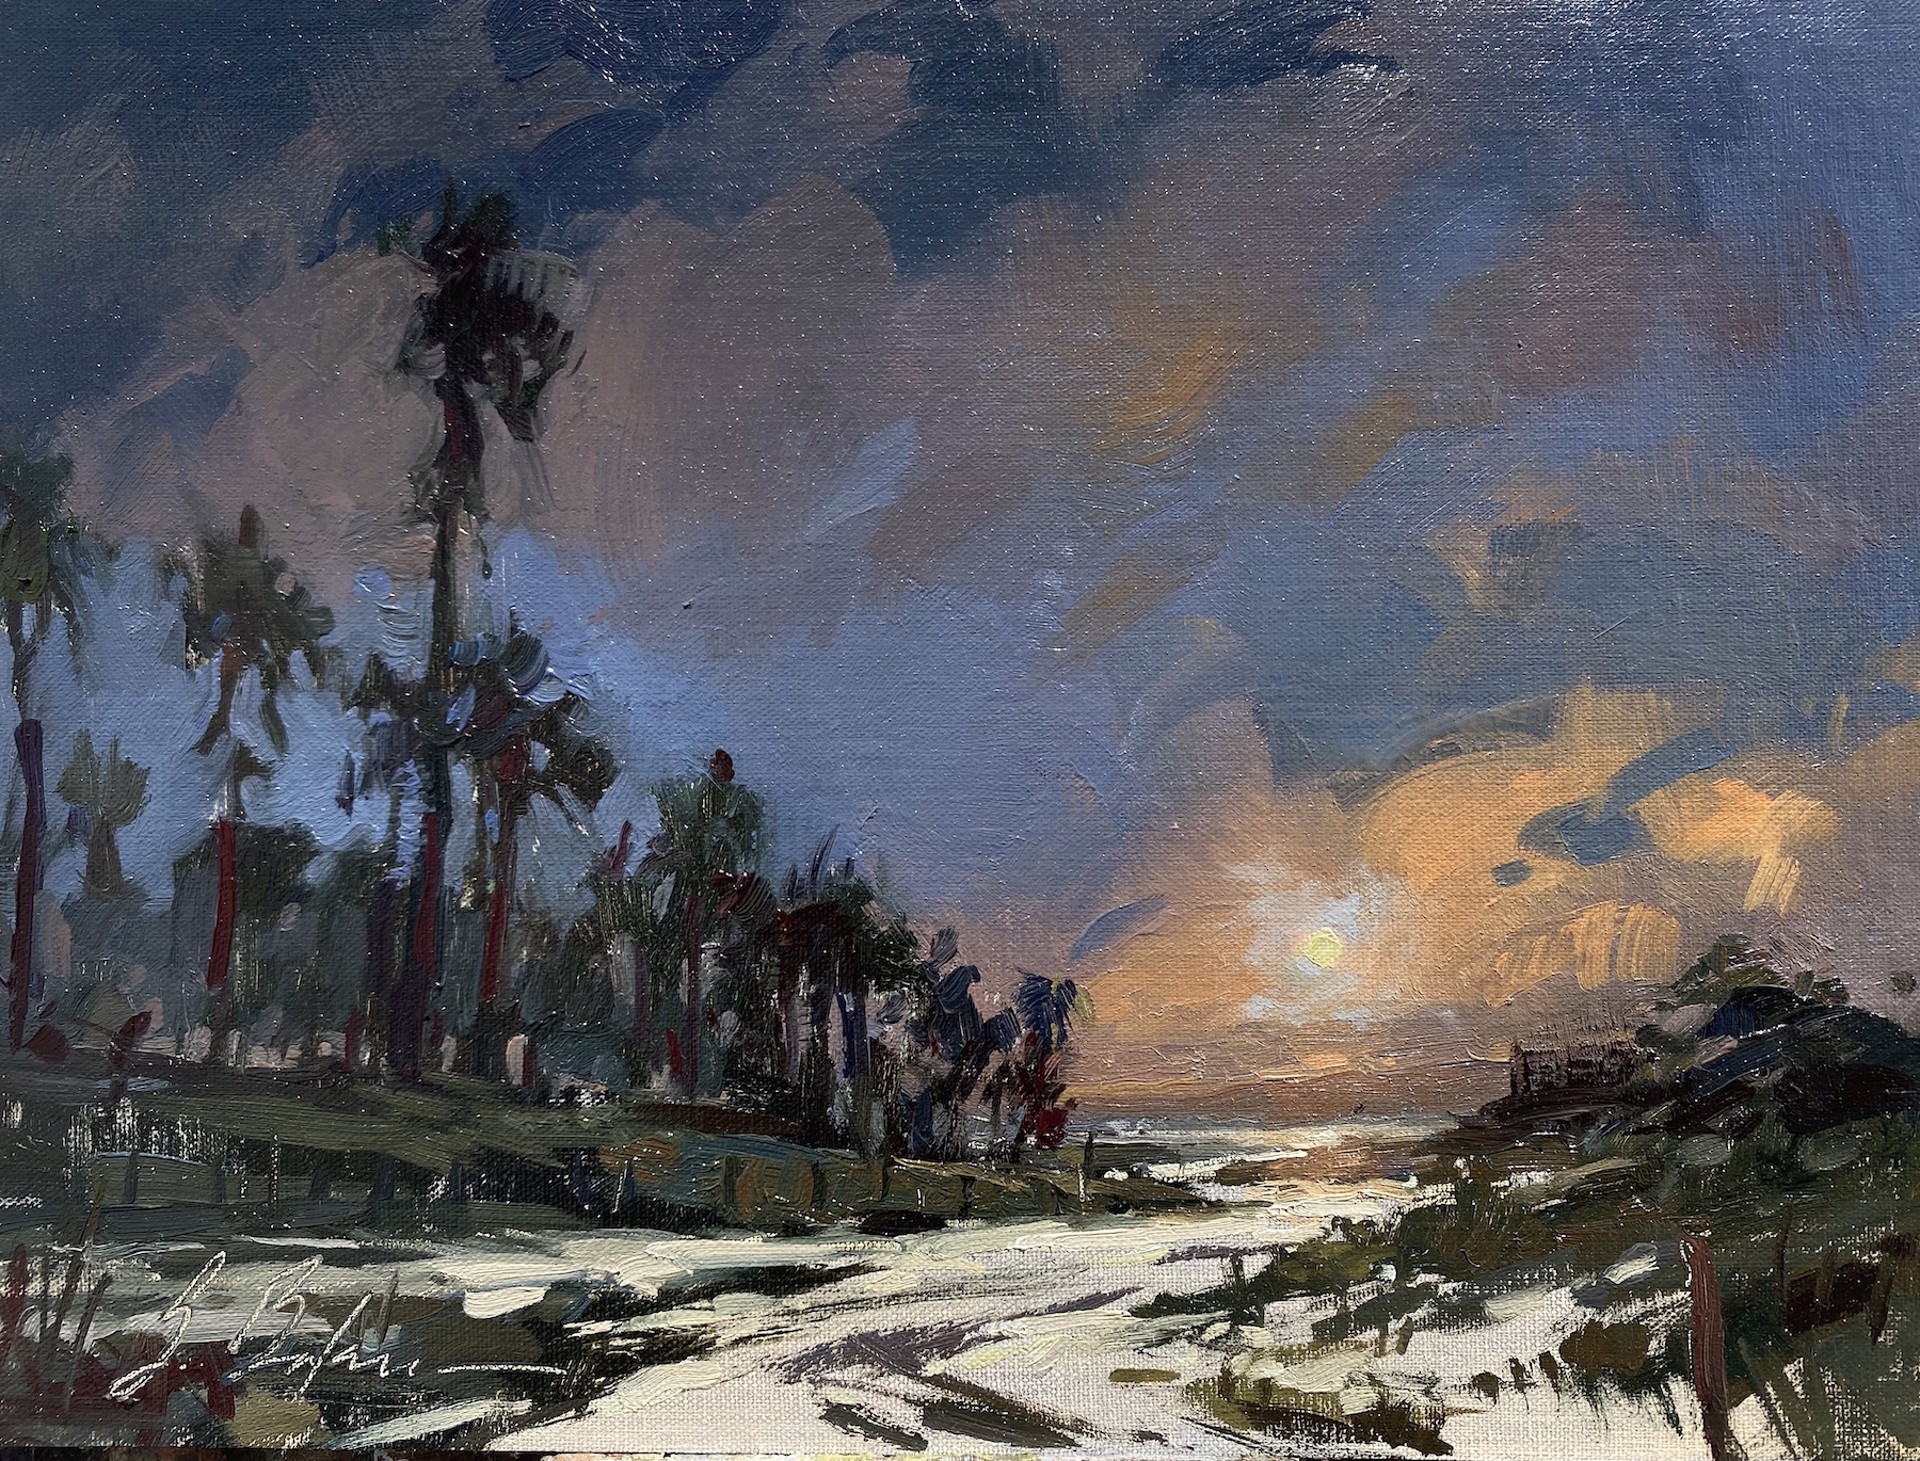 East Beach Moonrise by Suzie Baker